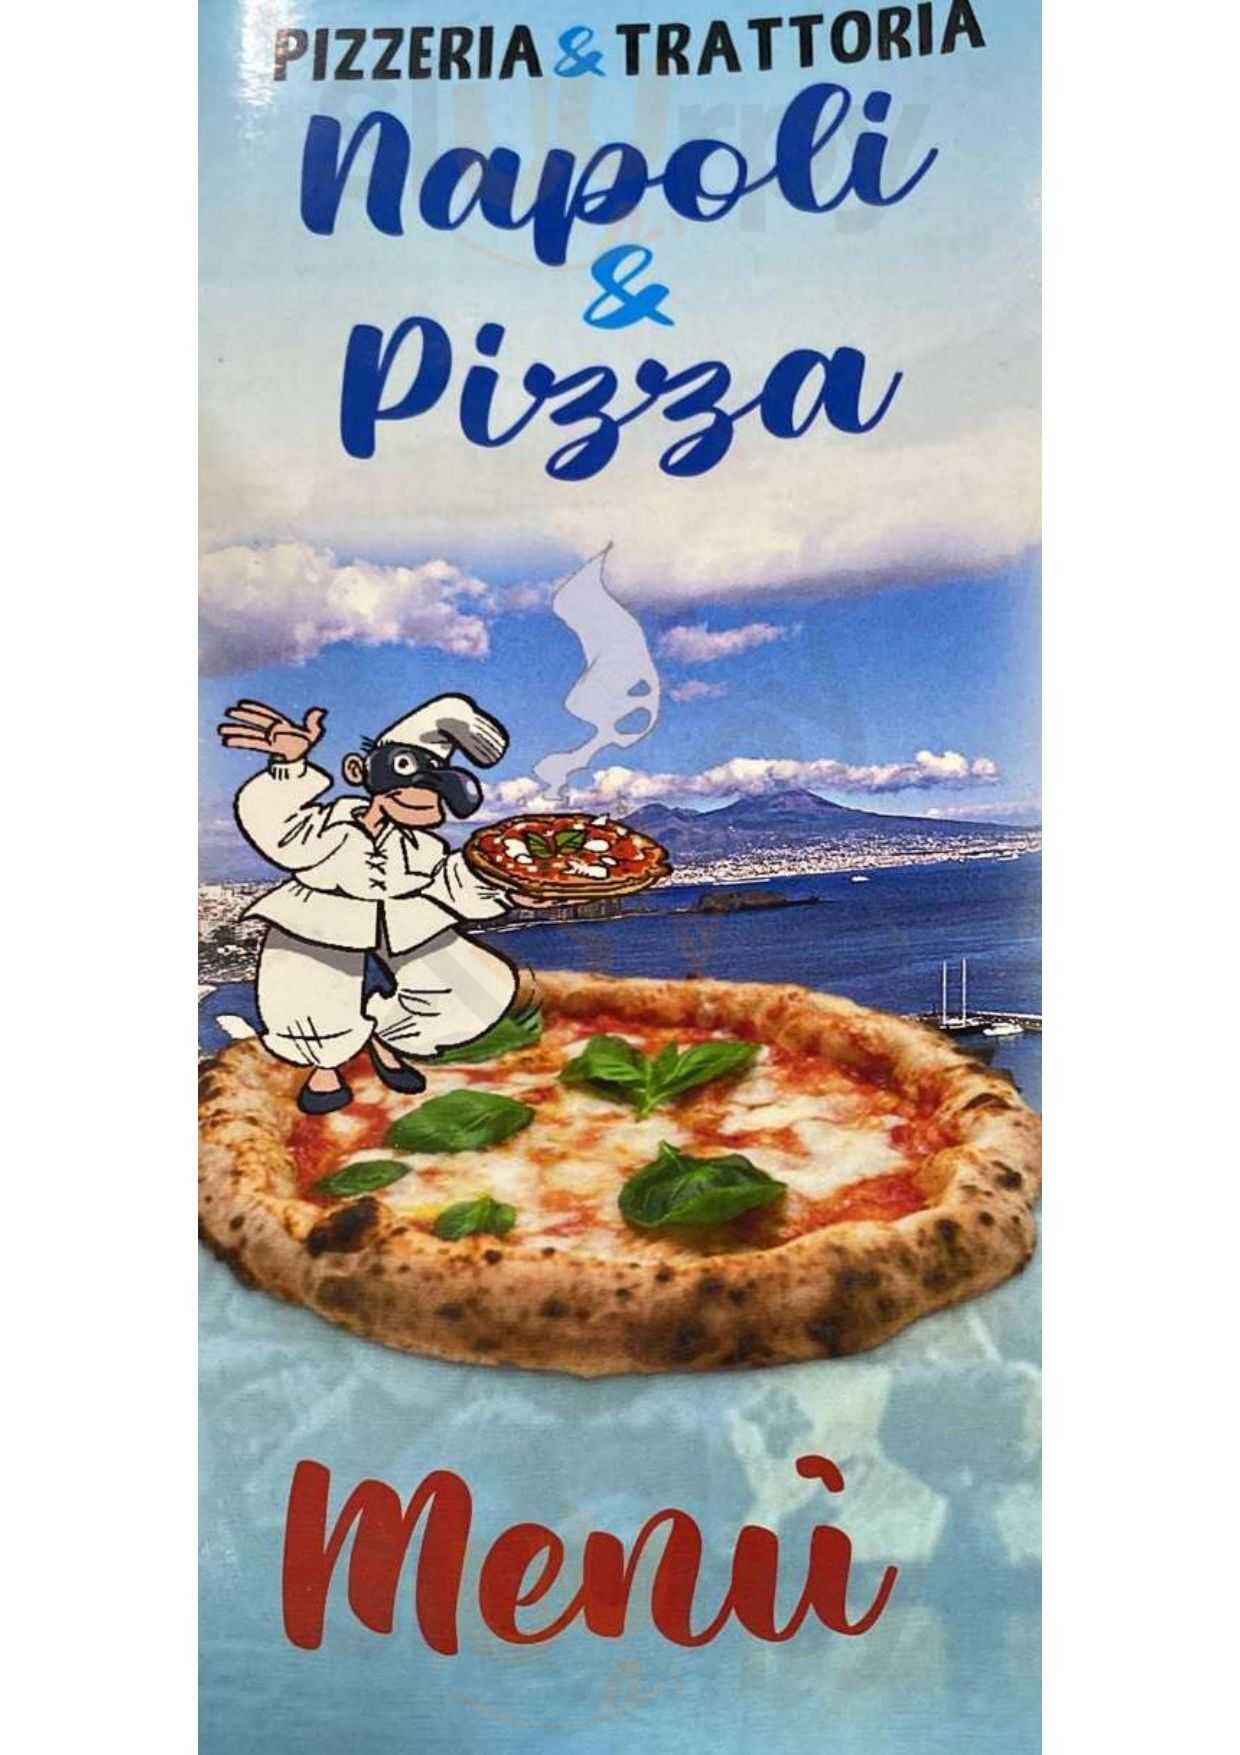 Pizzeria Napoli E Pizza Aversa menù 1 pagina